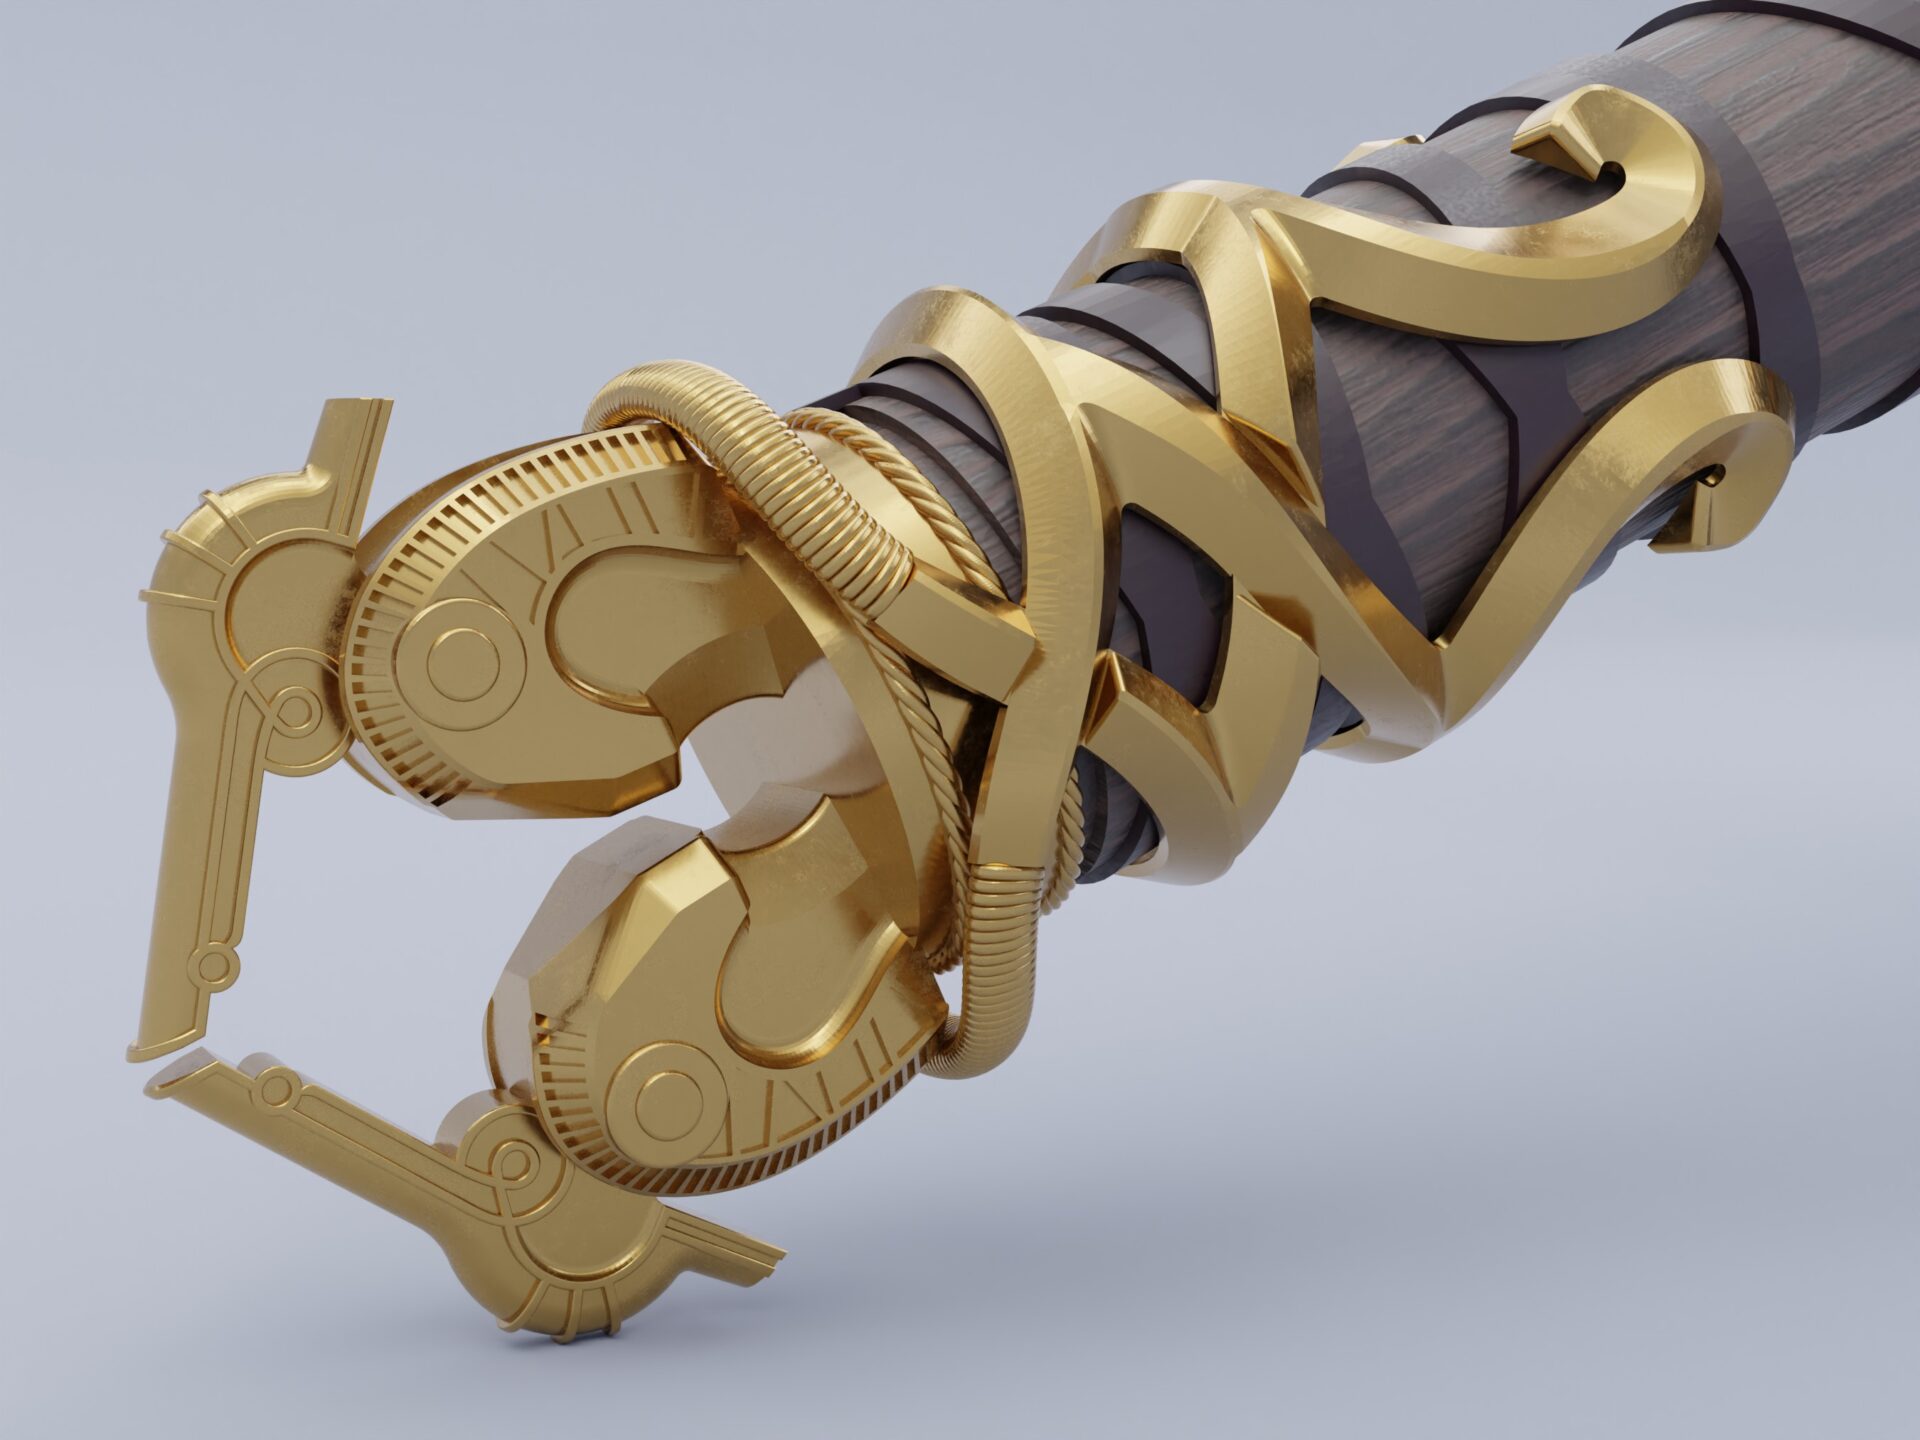 Mjolnir god of war ragnarok 3D model 3D printable